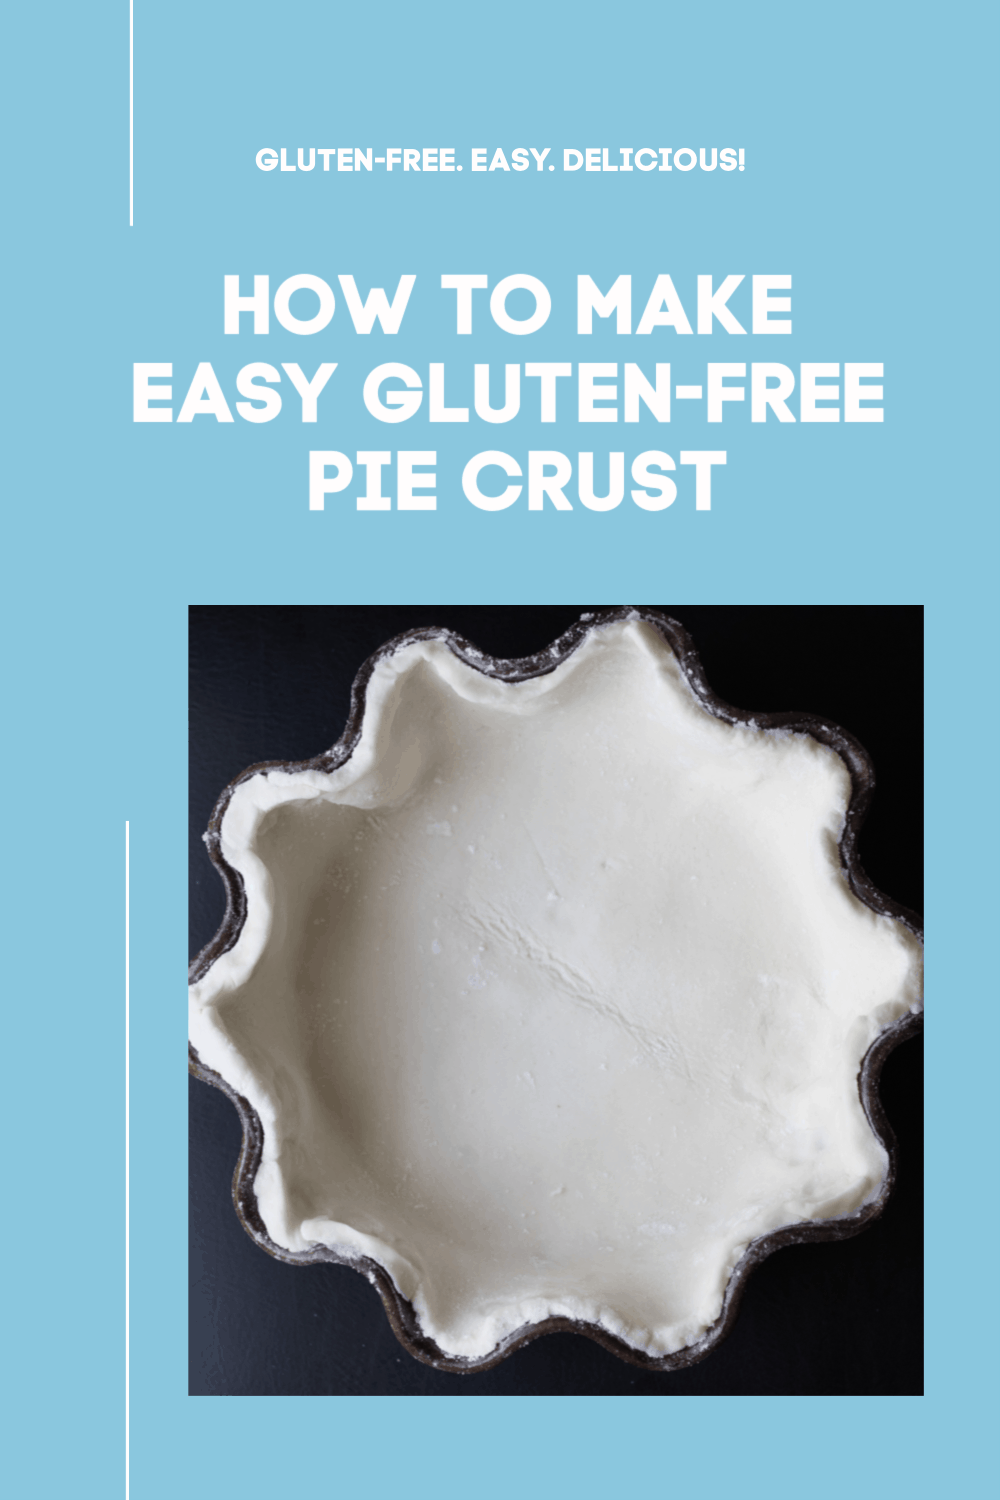 Picture perfect gluten-free pie crust! 